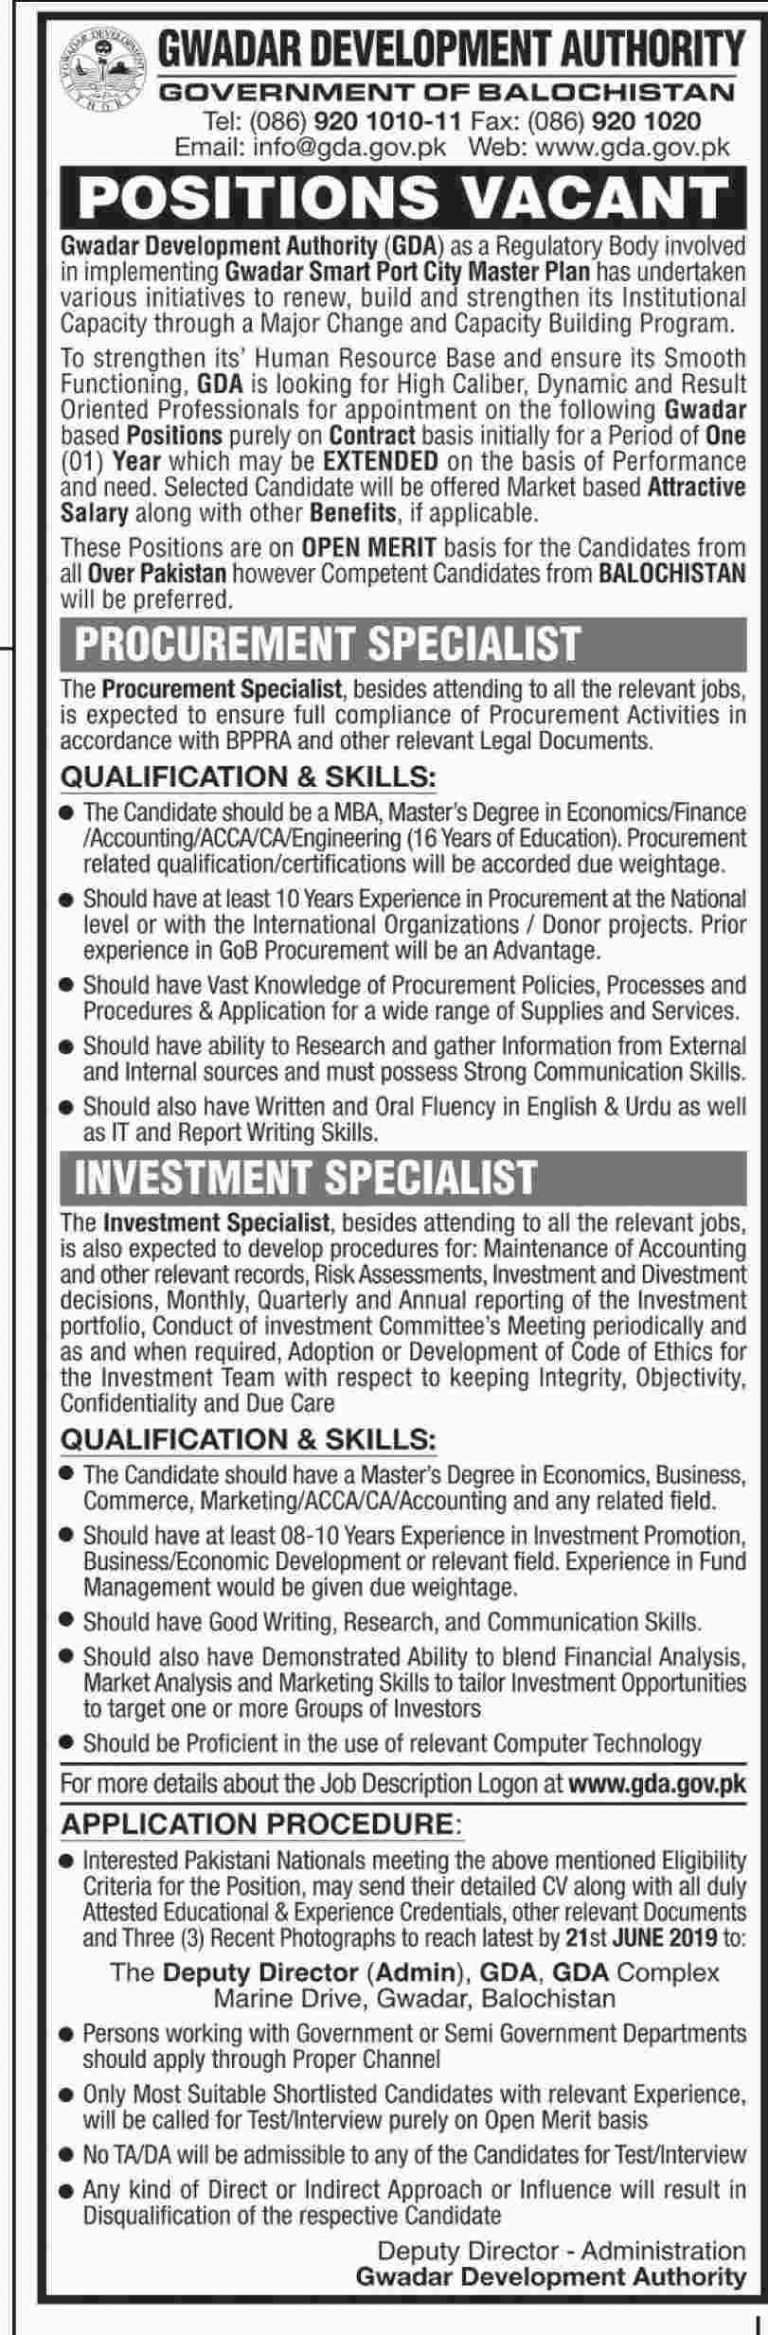 Gwadar Development Authority (GDA) Jobs 2019 for Various Professionals